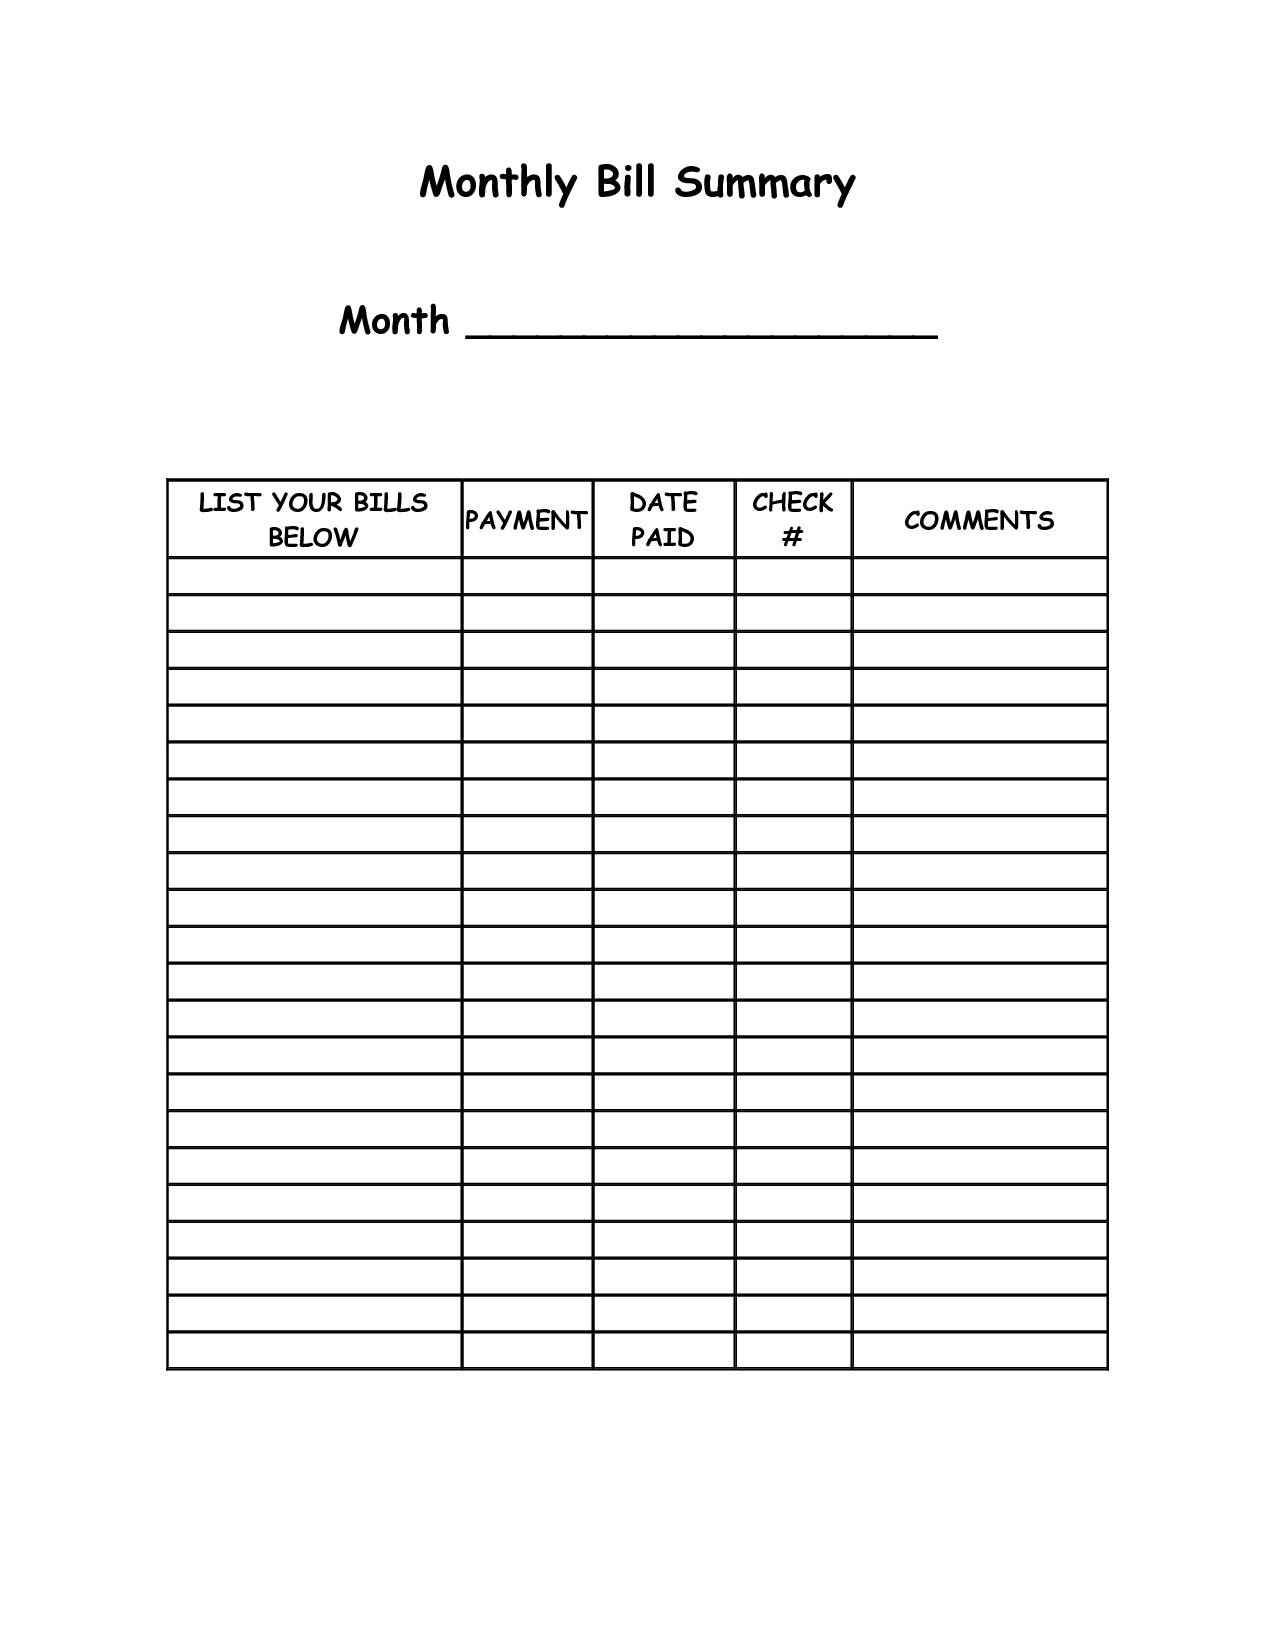 Monthly Bill Summary Doc | Organization | Bill Payment Organization | Free Printable Monthly Bill Payment Worksheet